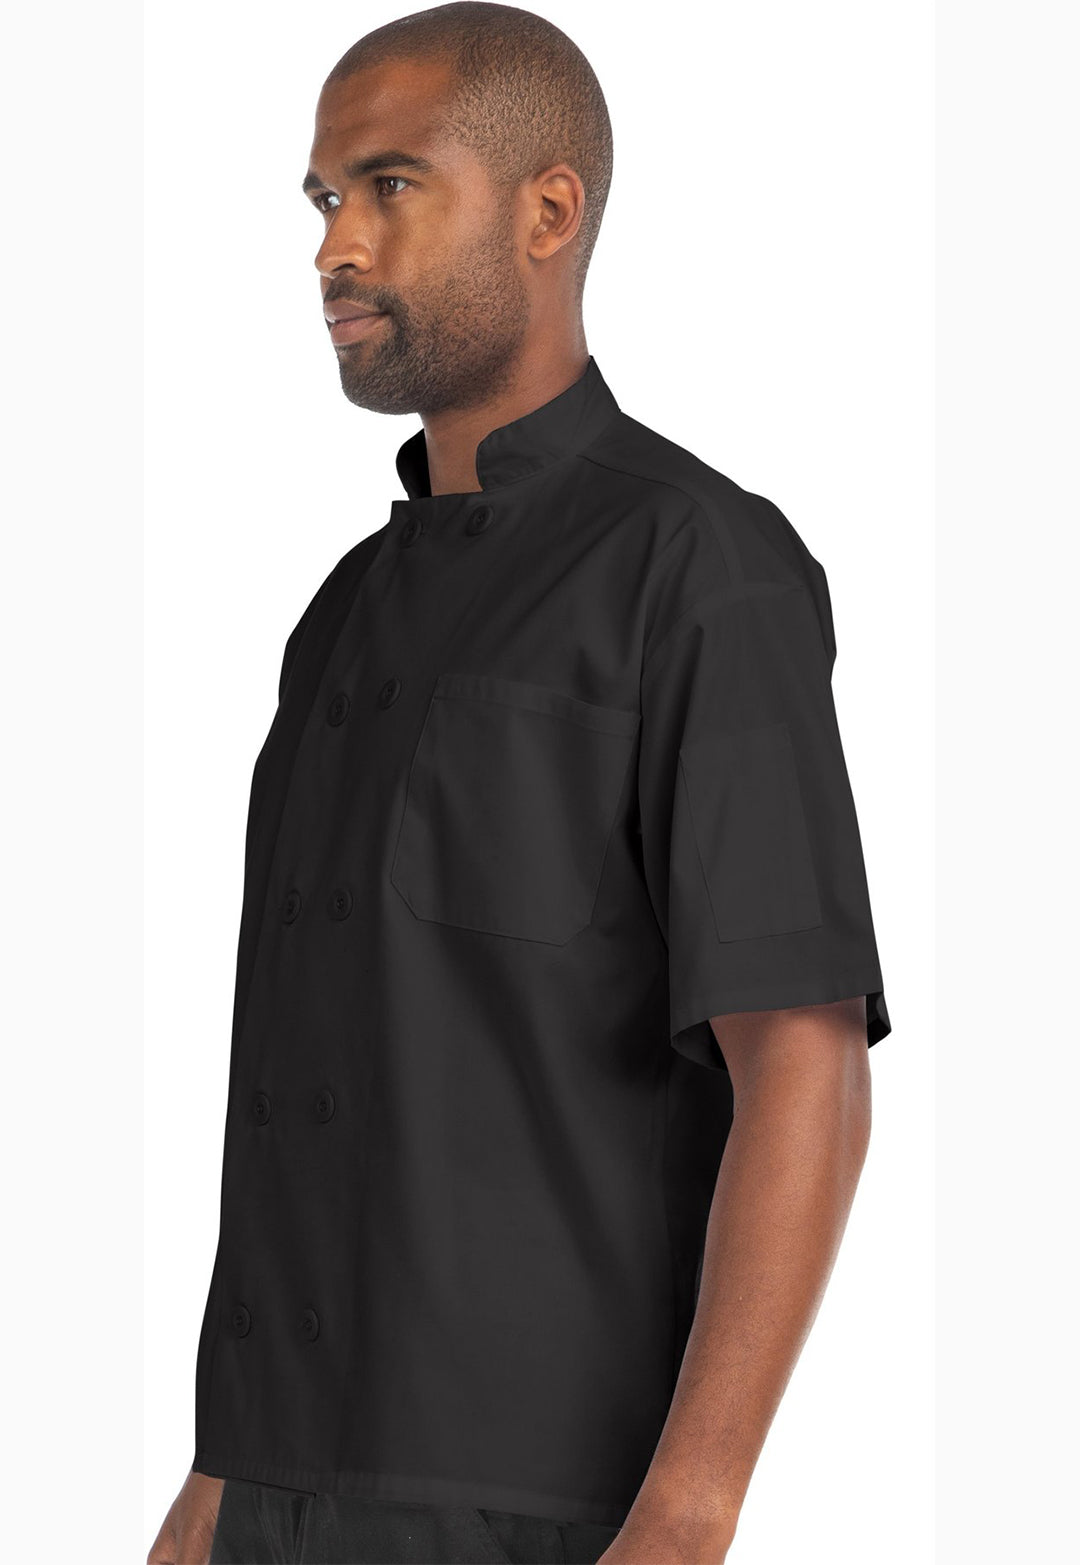 Arlene - Unisex Short Sleeve Chef Coat By MediChic XS-2XL / Black